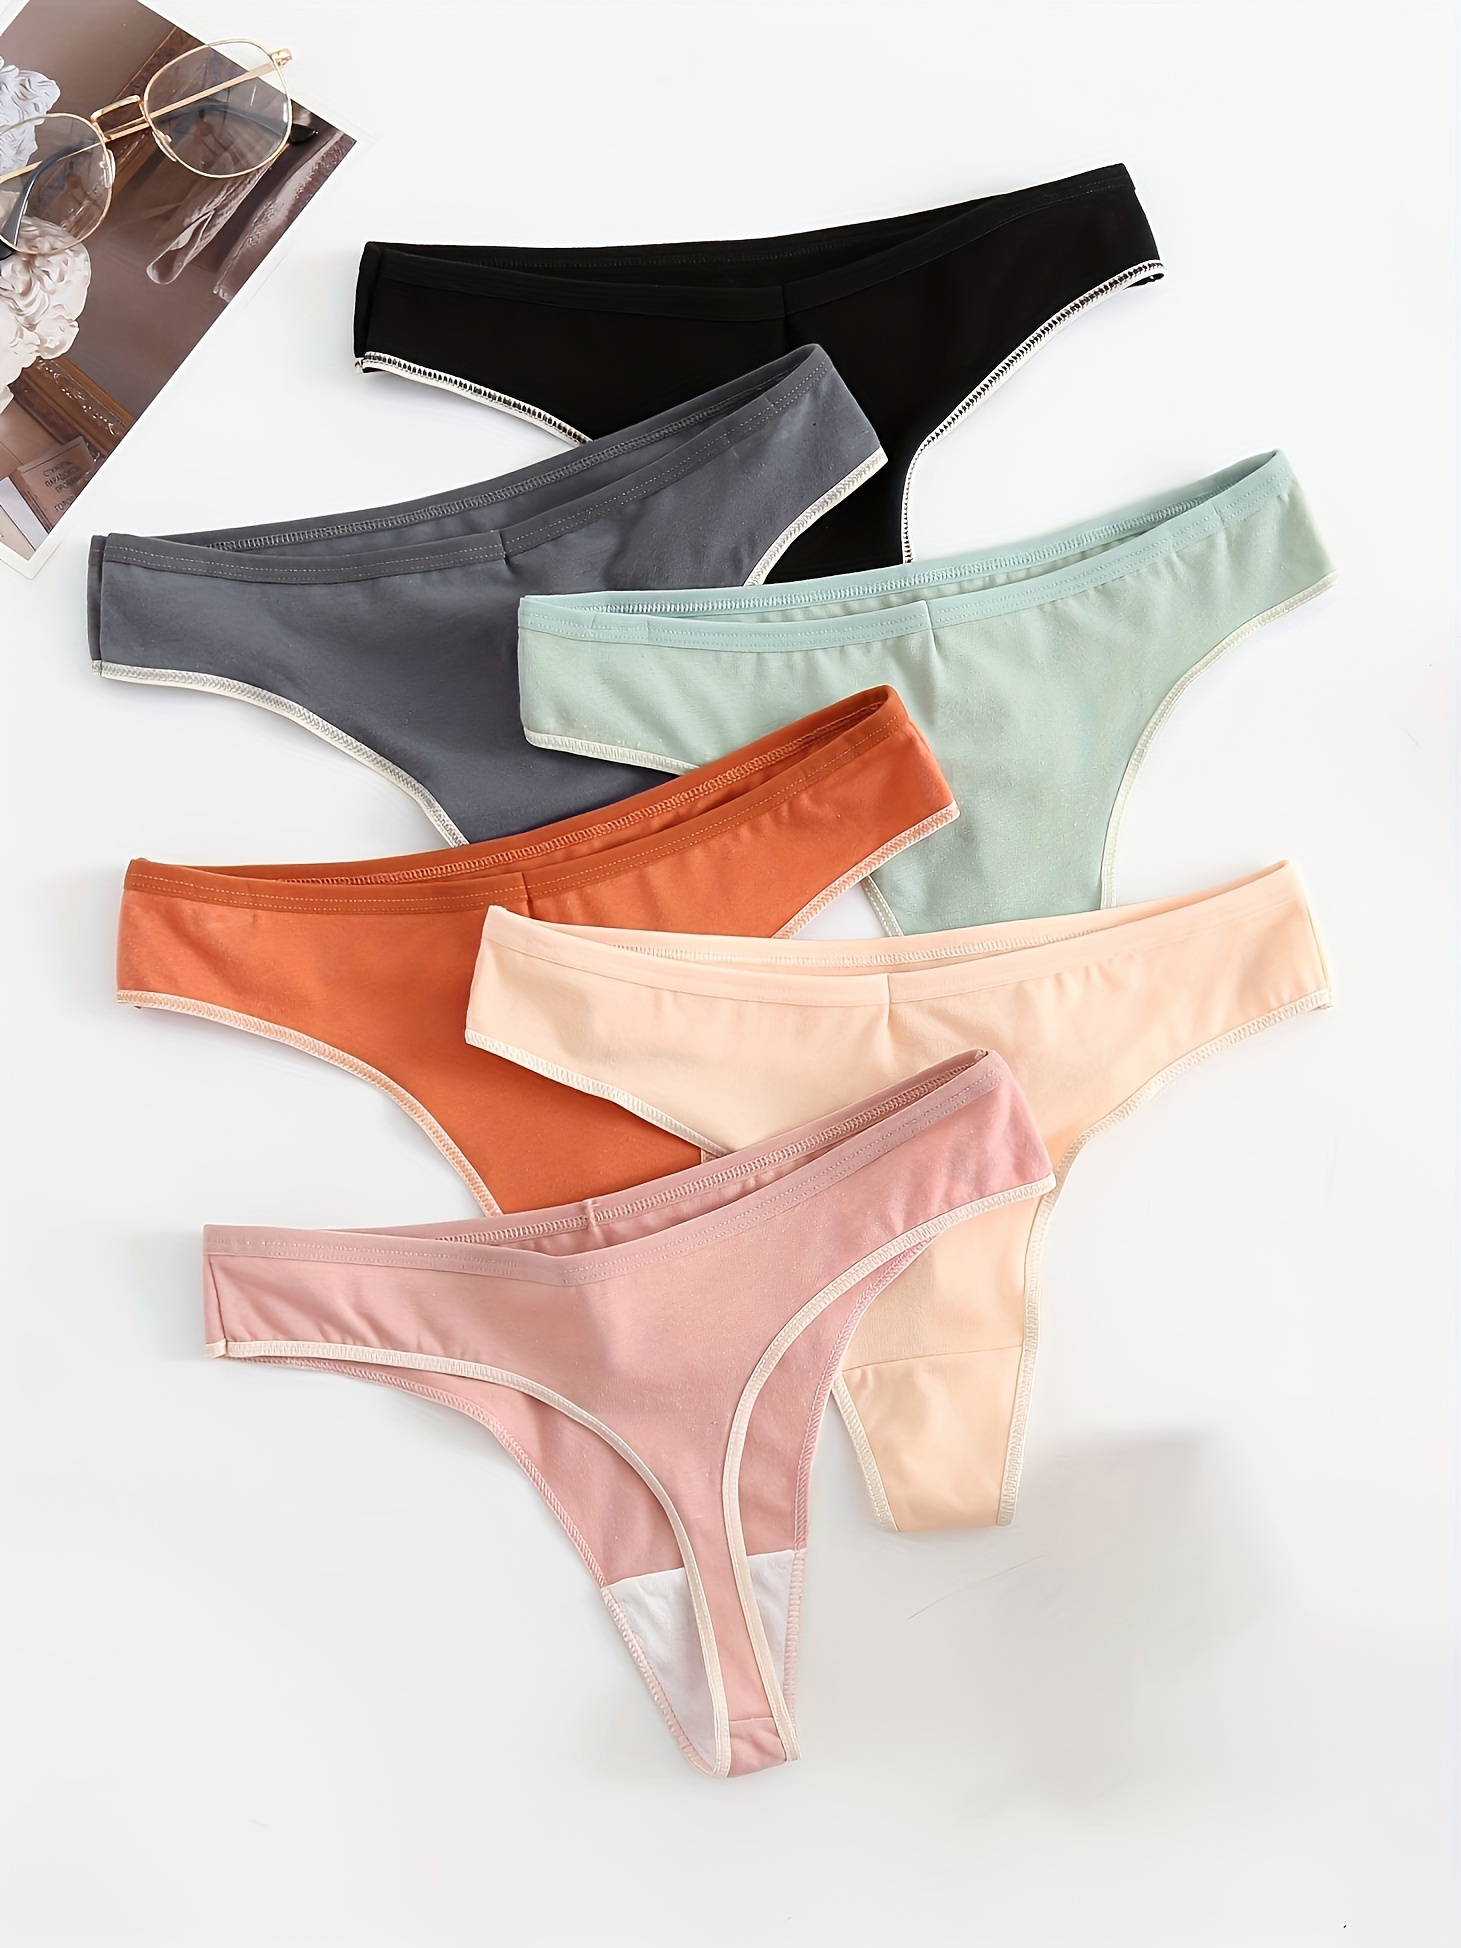 New Seamless Cotton Thong Women Low Waist Panties Sexy Underwear